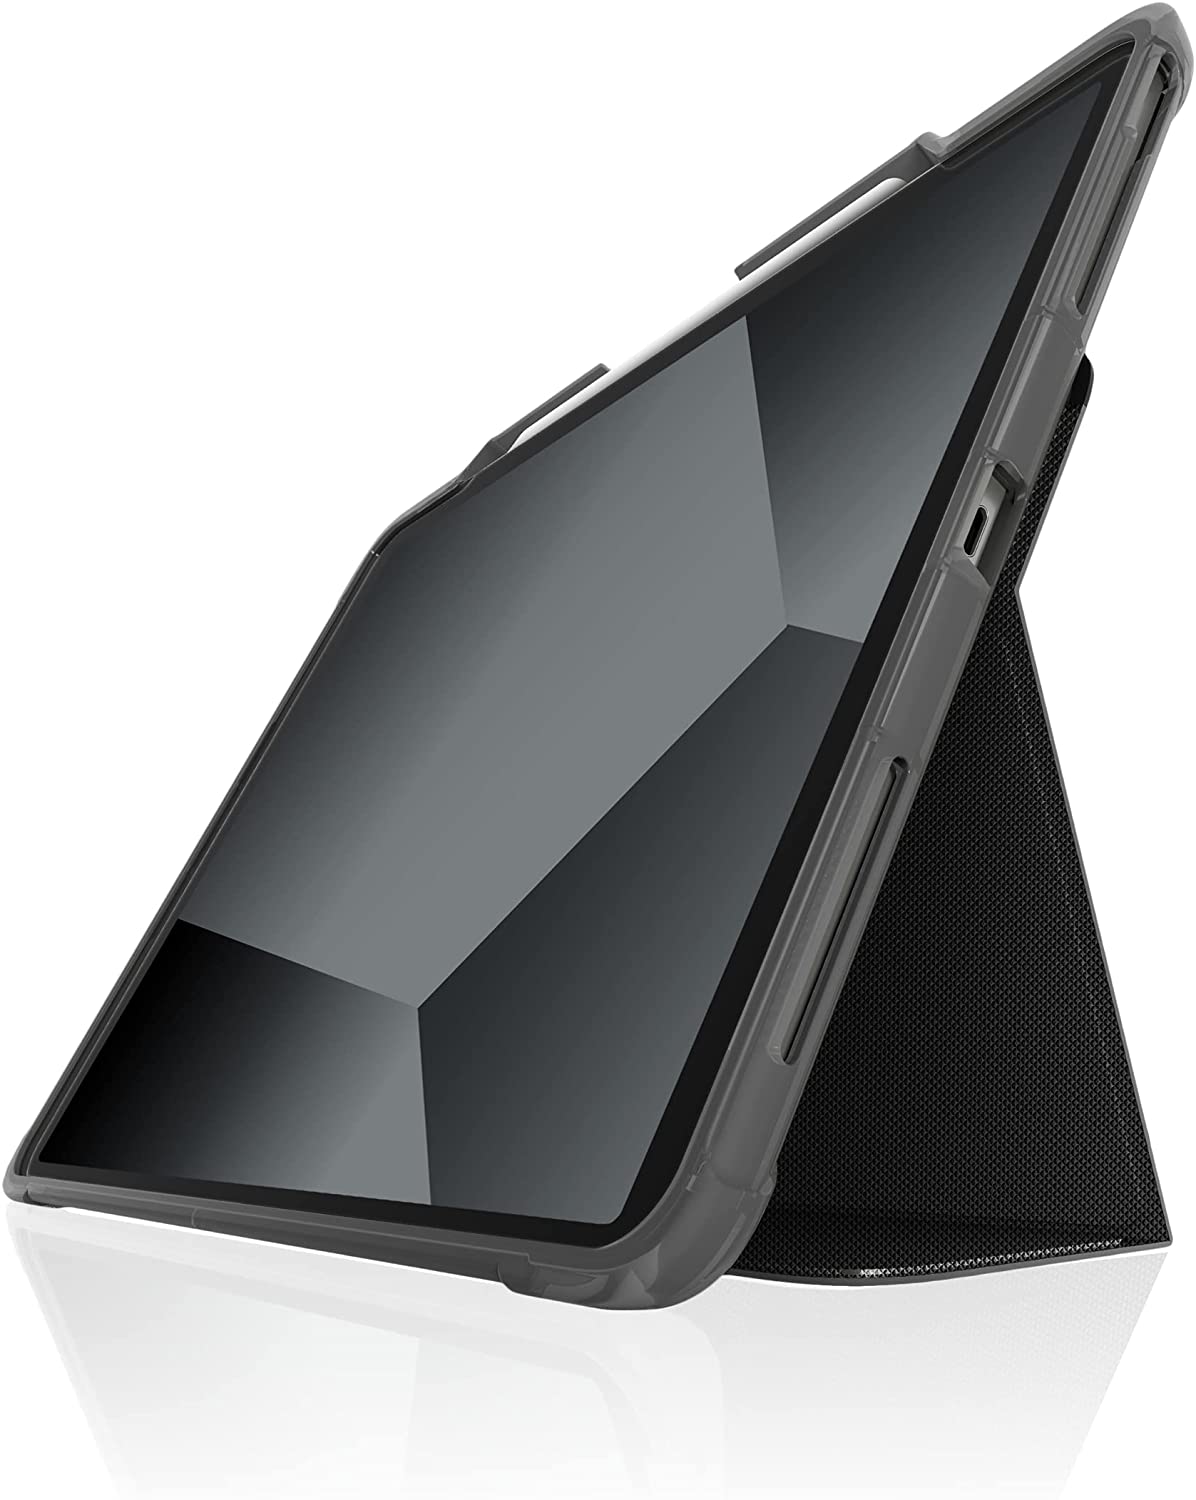 STM Dux Plus Rugged Case For iPad Pro 12.9" 5th Gen 2021 - Black - Mac Addict